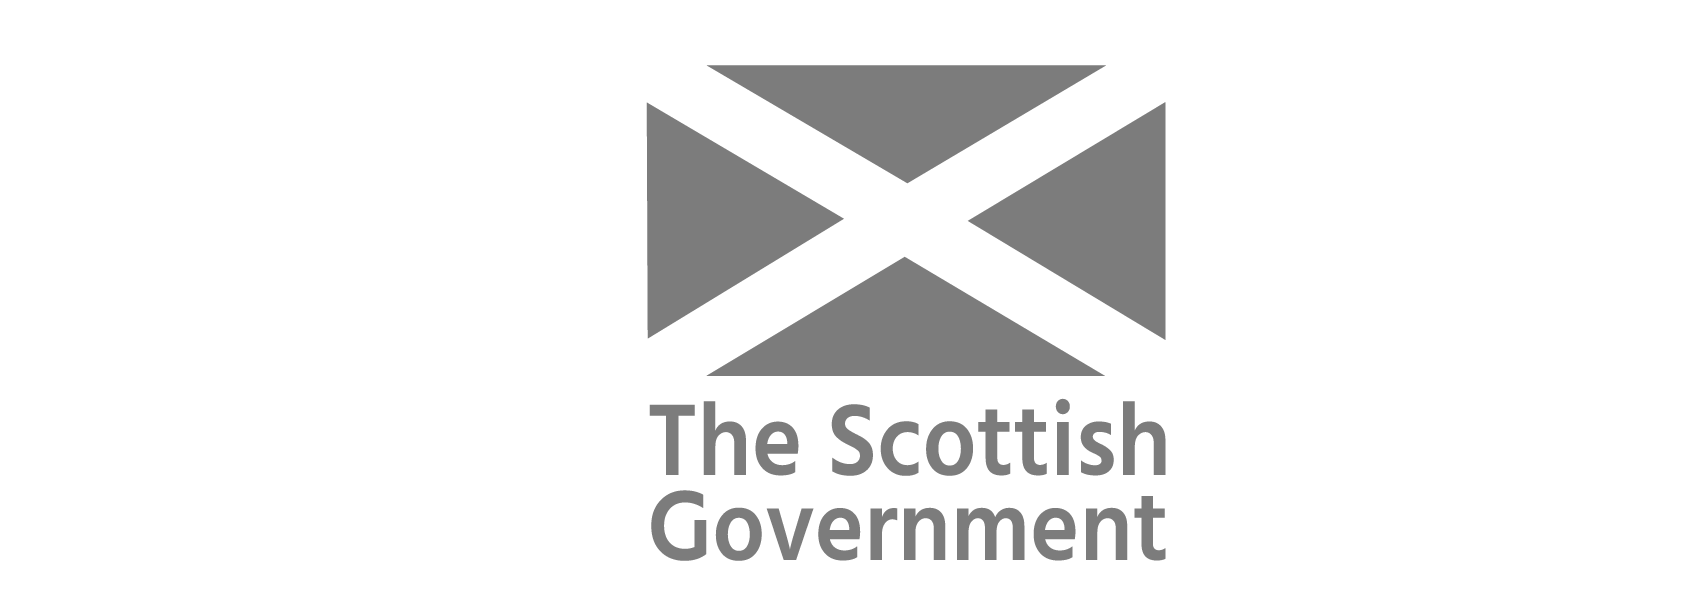 the-scottish-government-logo-5